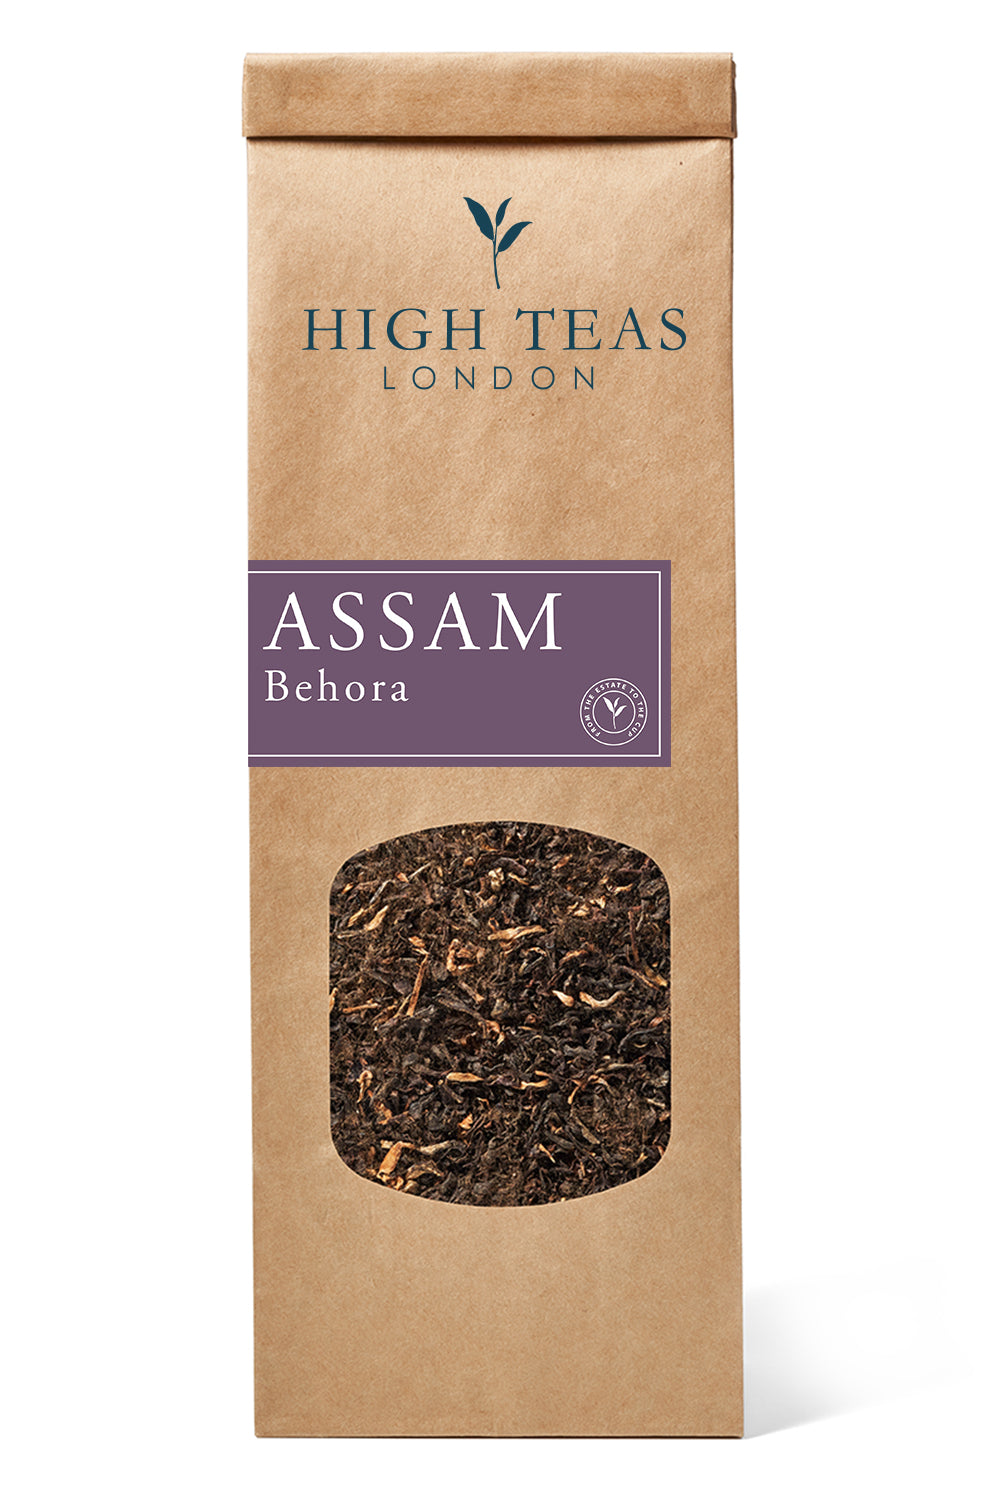 Assam Behora-50g-Loose Leaf Tea-High Teas